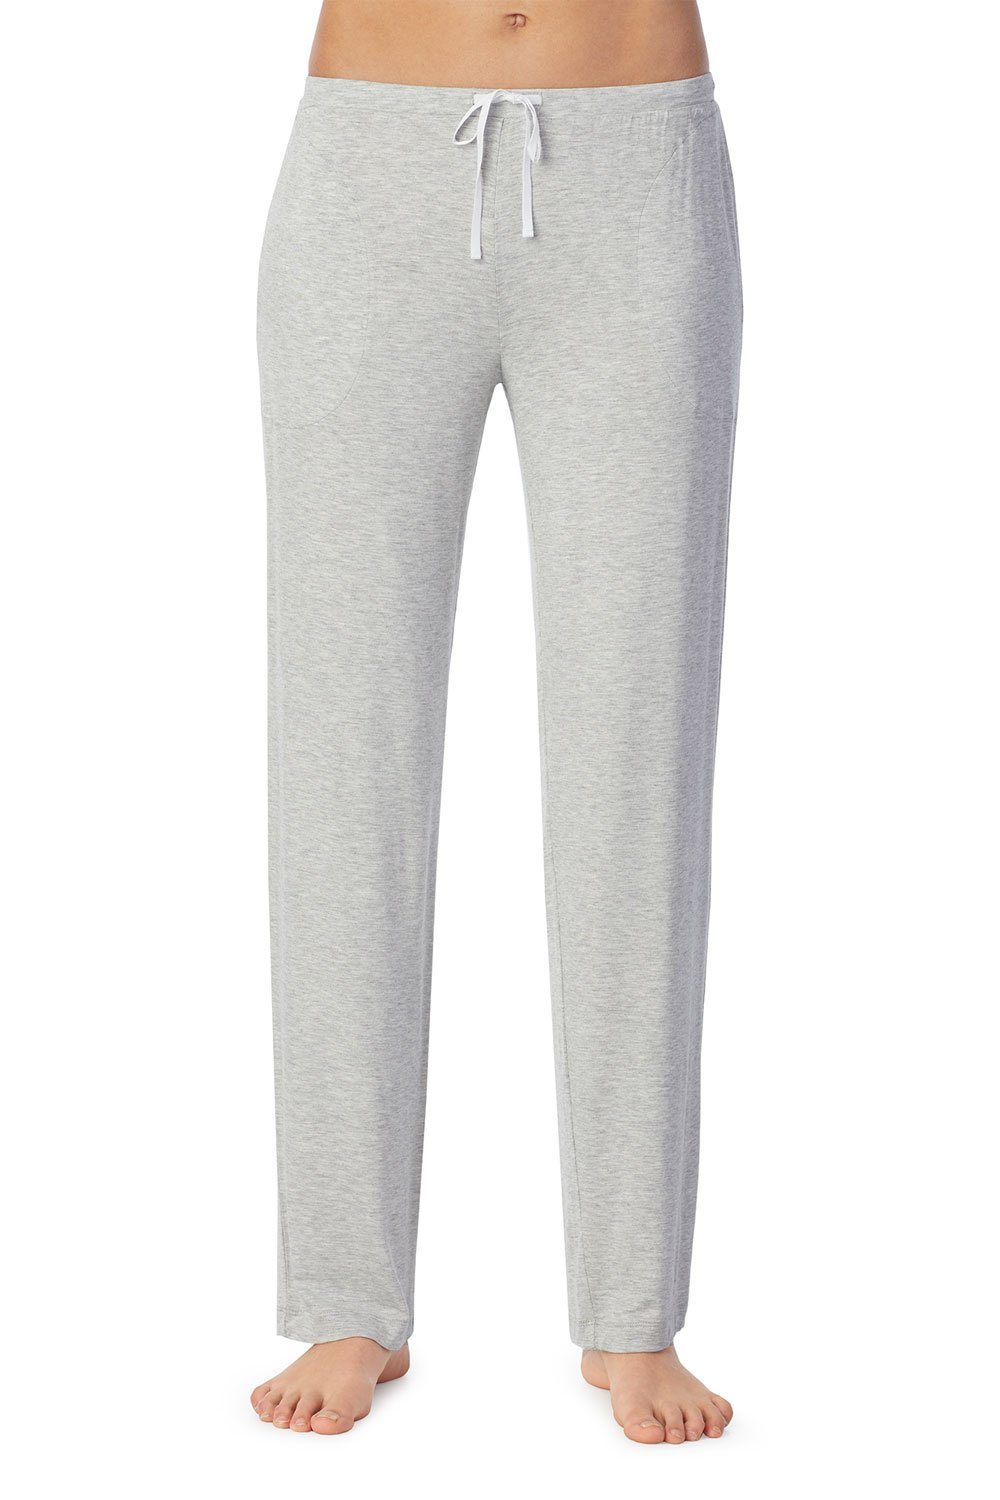 DKNY Loungehose Pant Essentials YI2719330 light grey heather